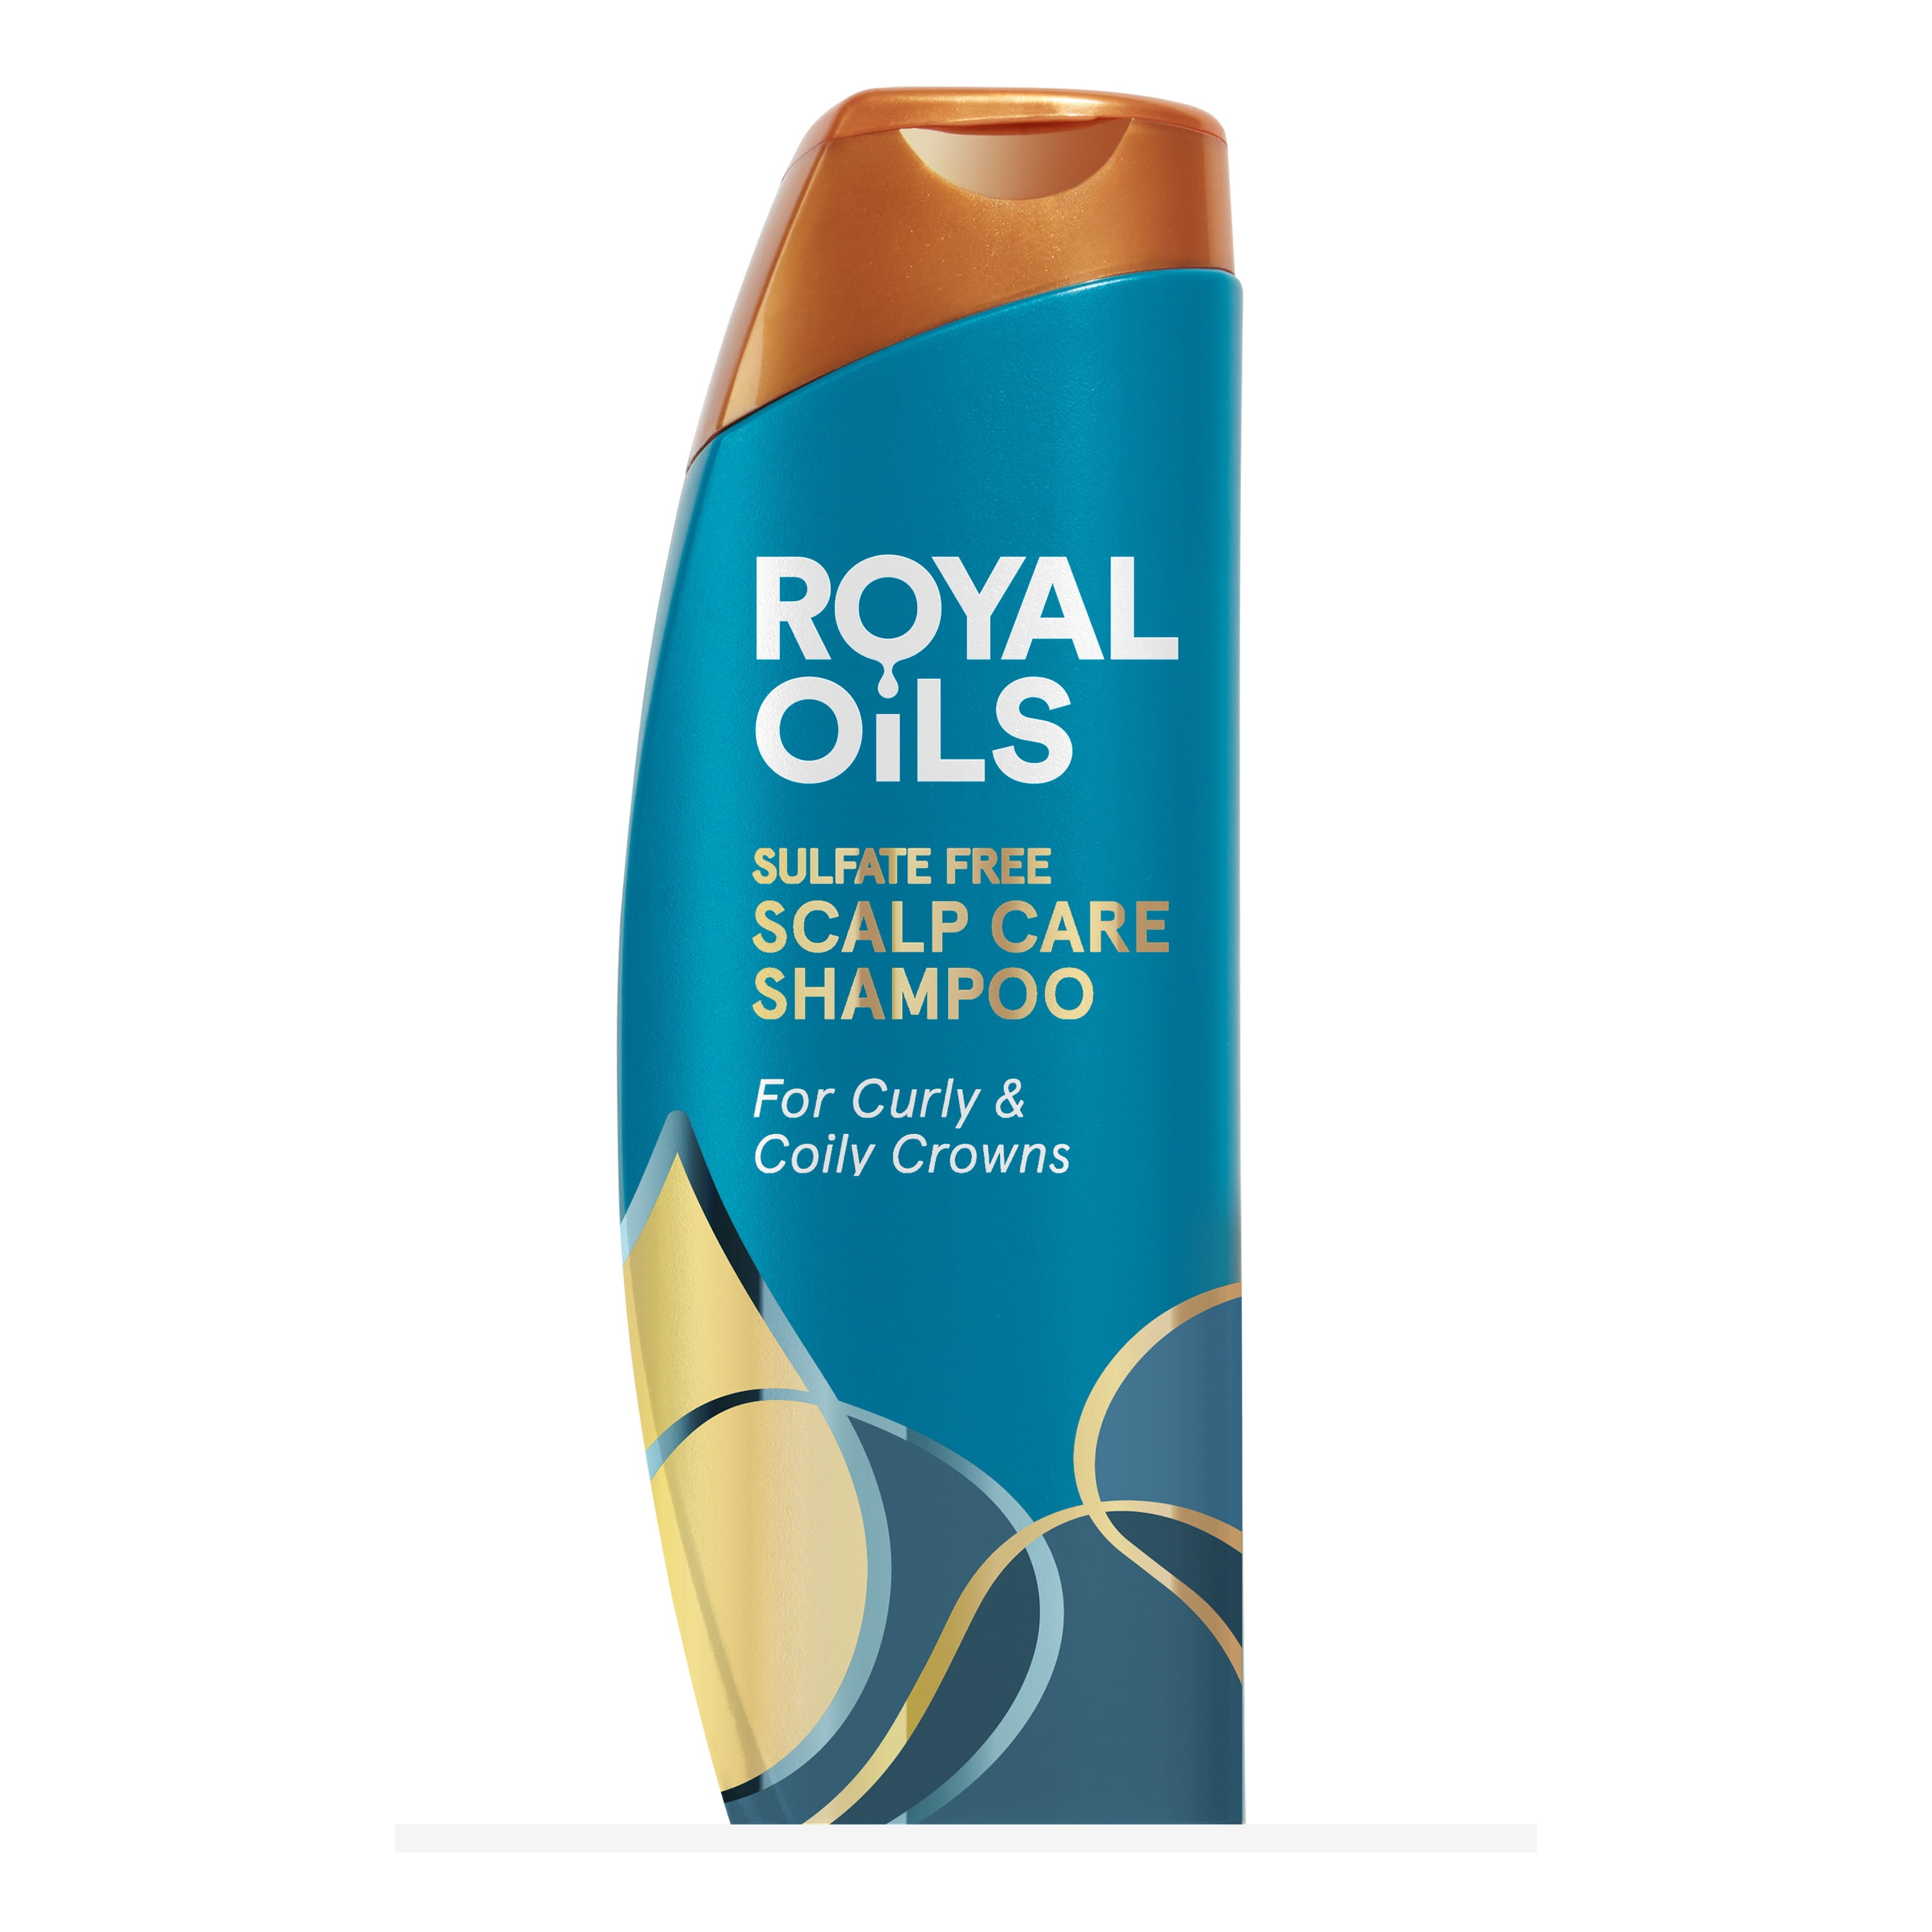 Royal Oils by Head & Shoulders Sulfate Free Scalp Care Shampoo, Coconut Oil and Apple Cider Vinegar, 12.8 fl oz